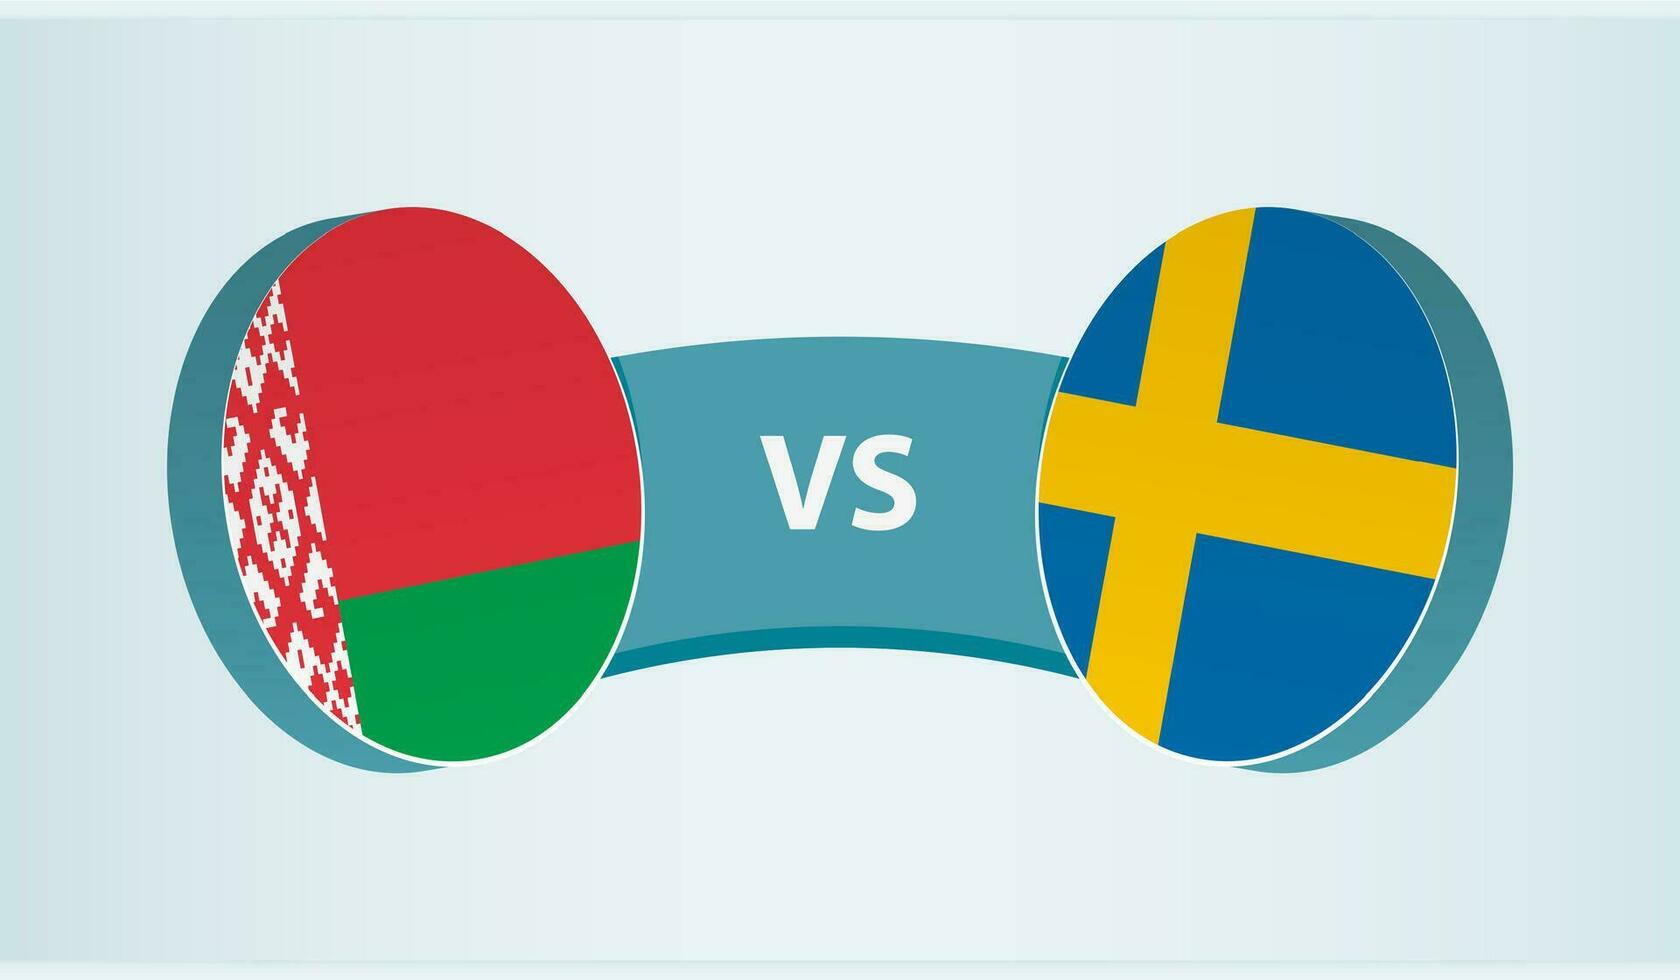 Belarus versus Sweden, team sports competition concept. vector